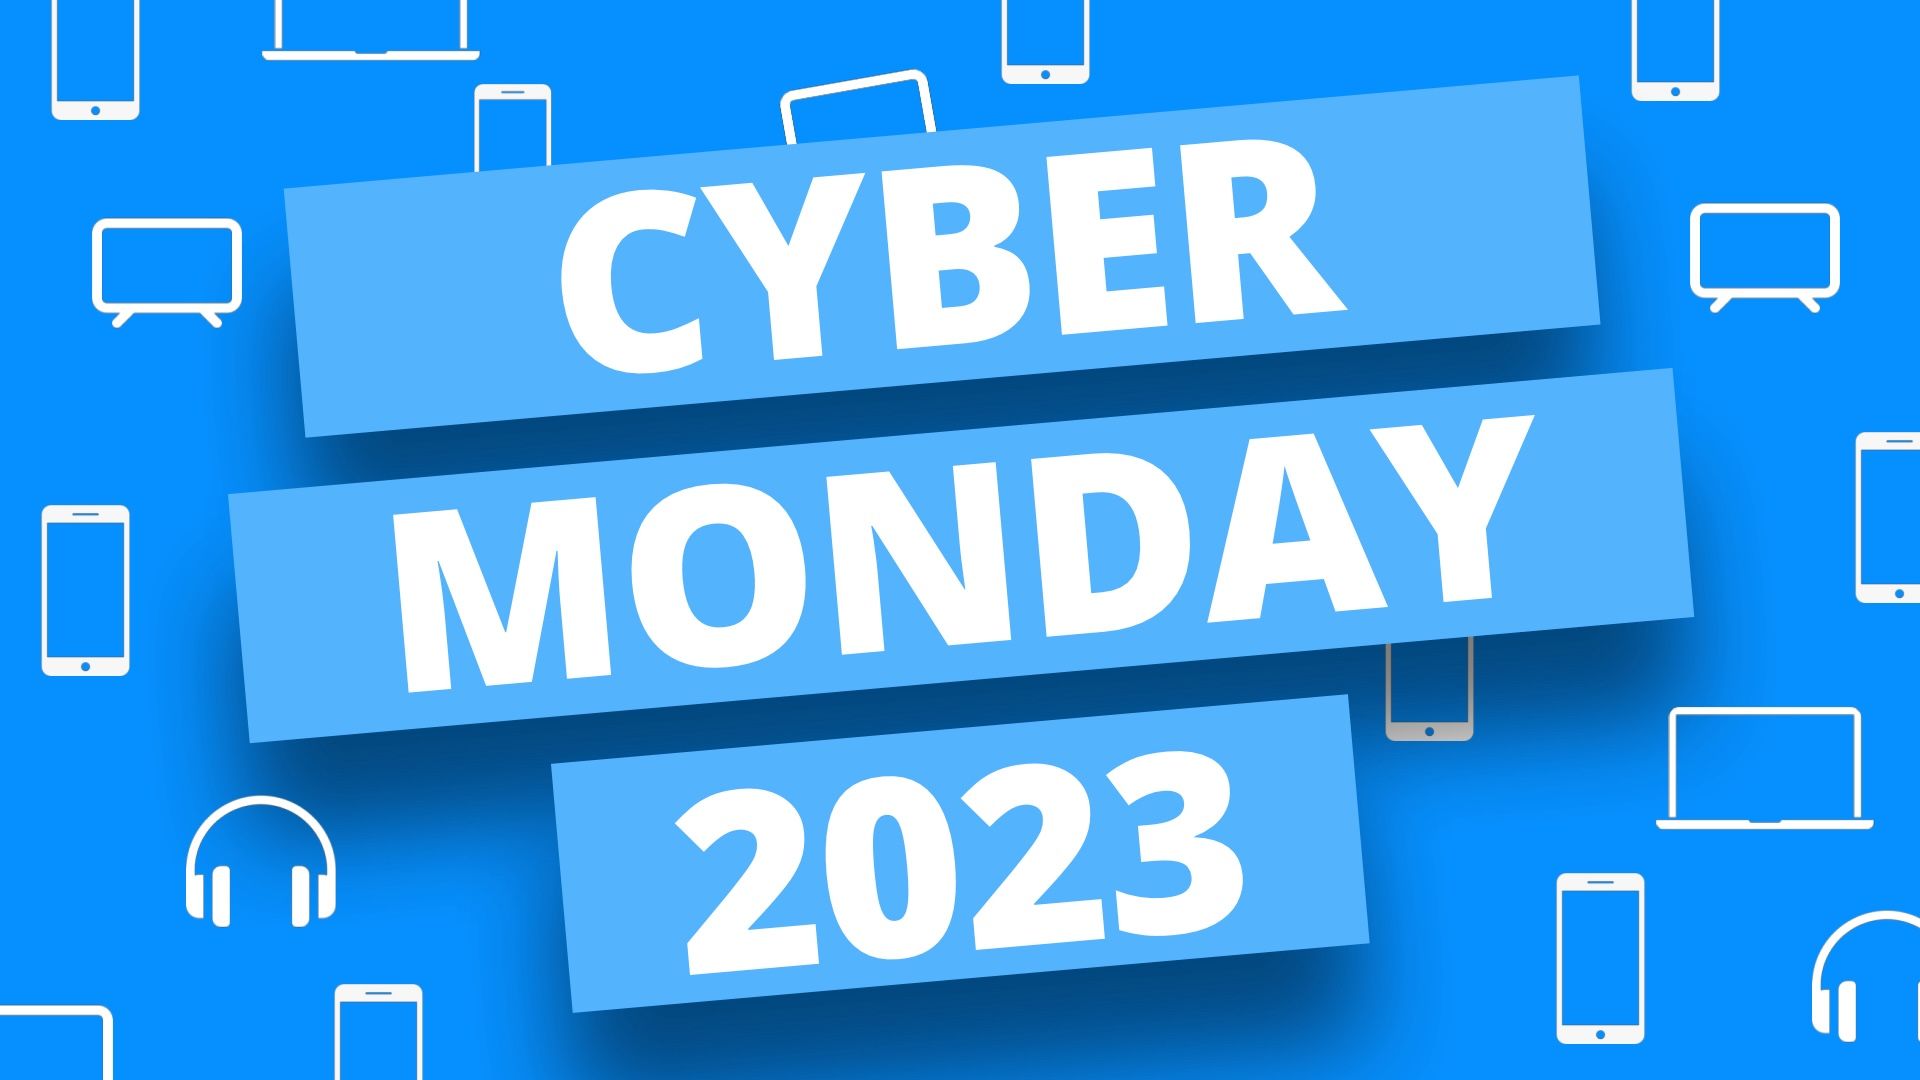 Cyber Monday 2023 deals